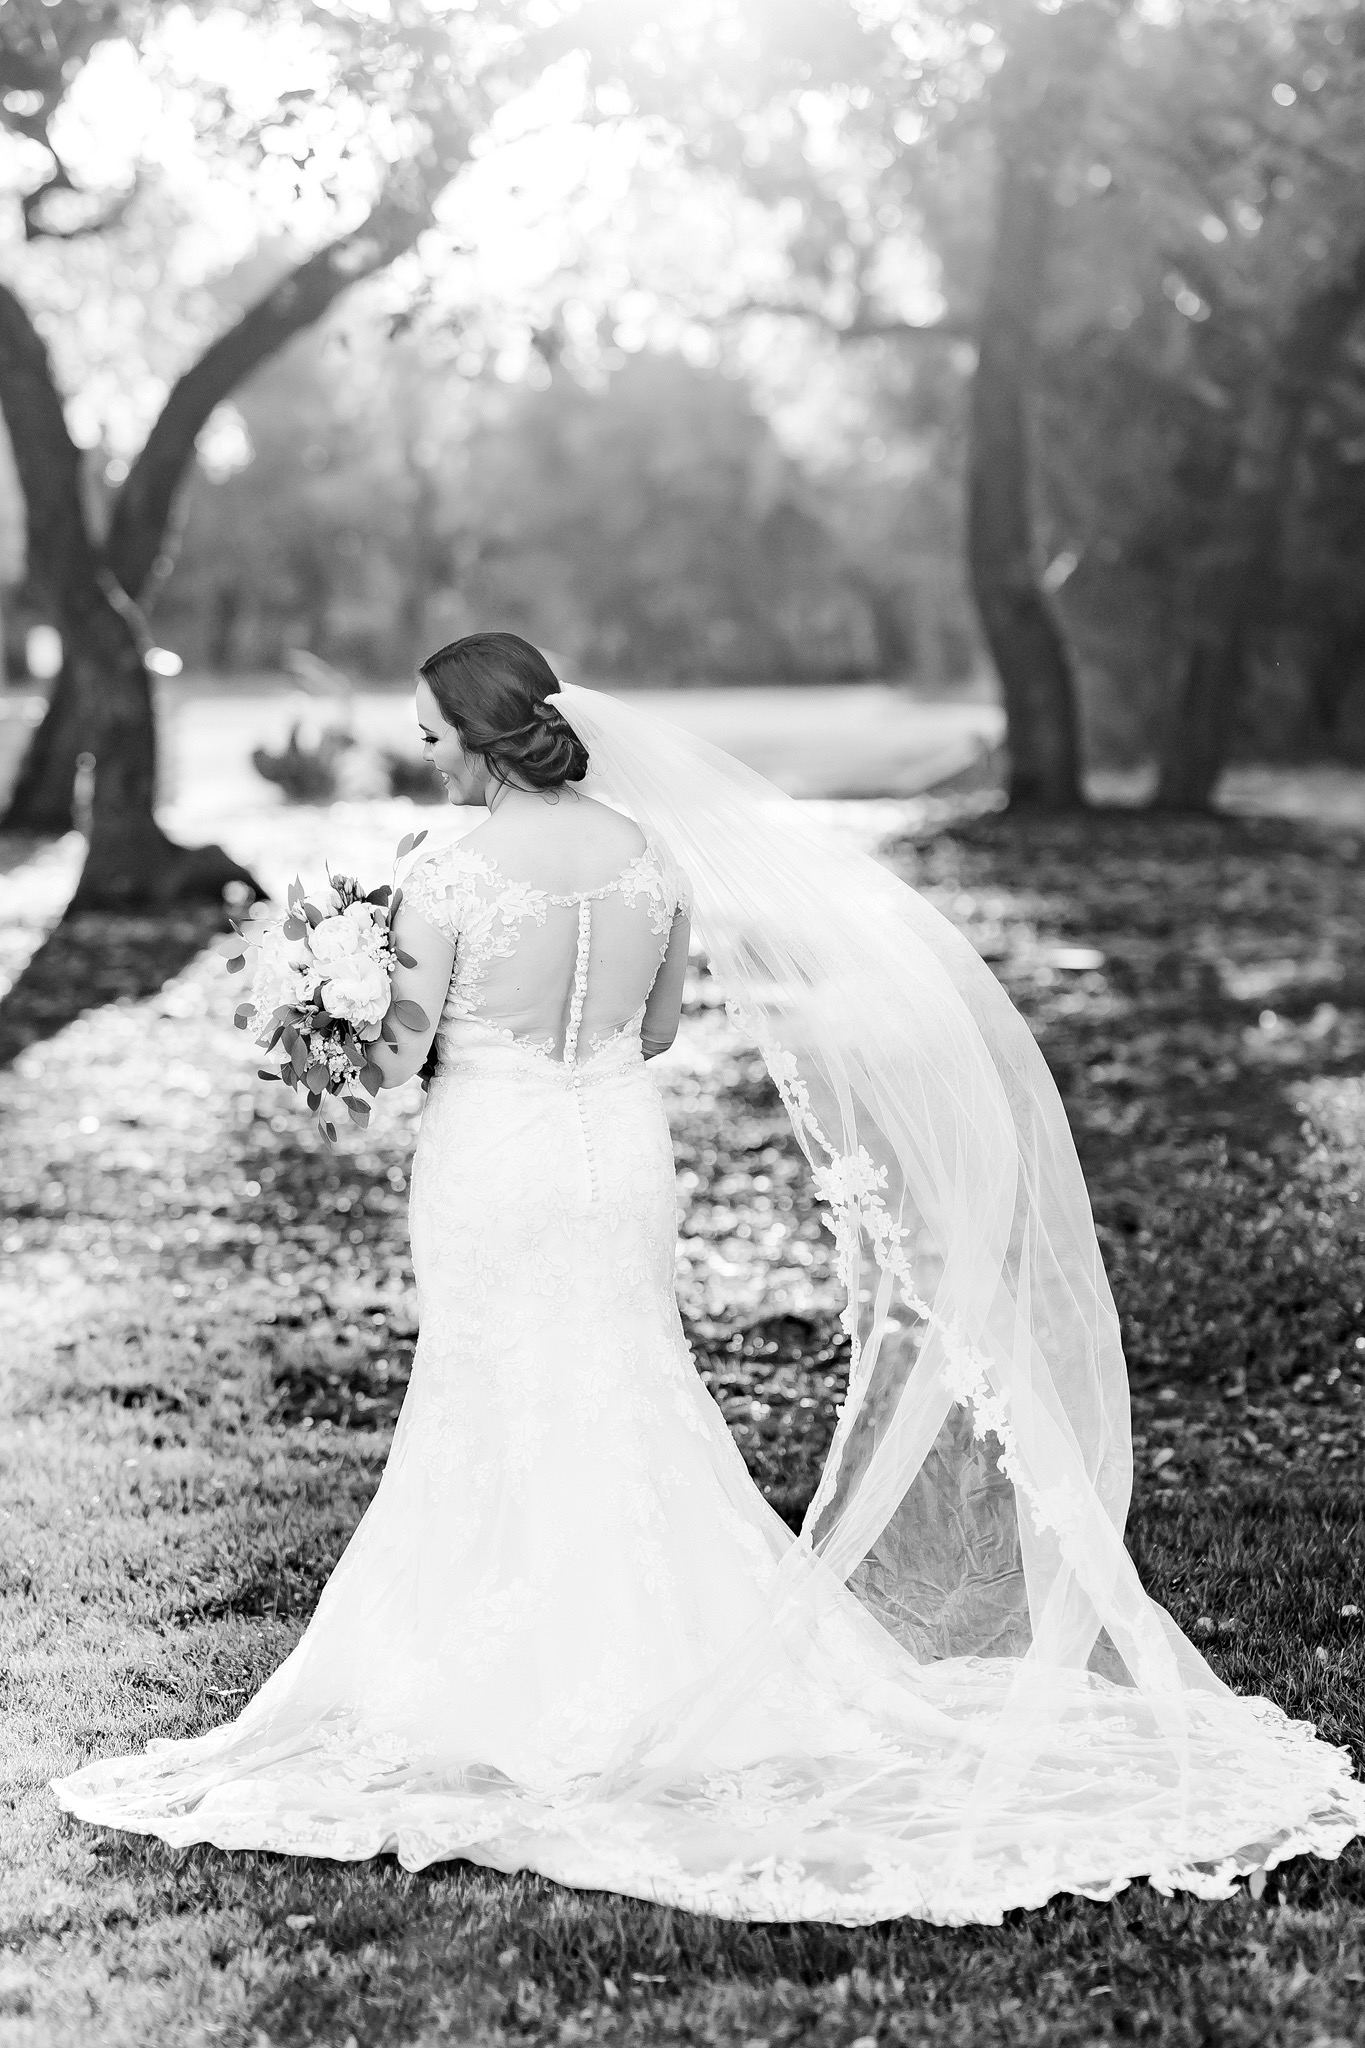 Bridal Session at Hyatt Hill Country in San Antonio, TX by Dawn Elizabeth Studios, San Antonio Wedding Photographer